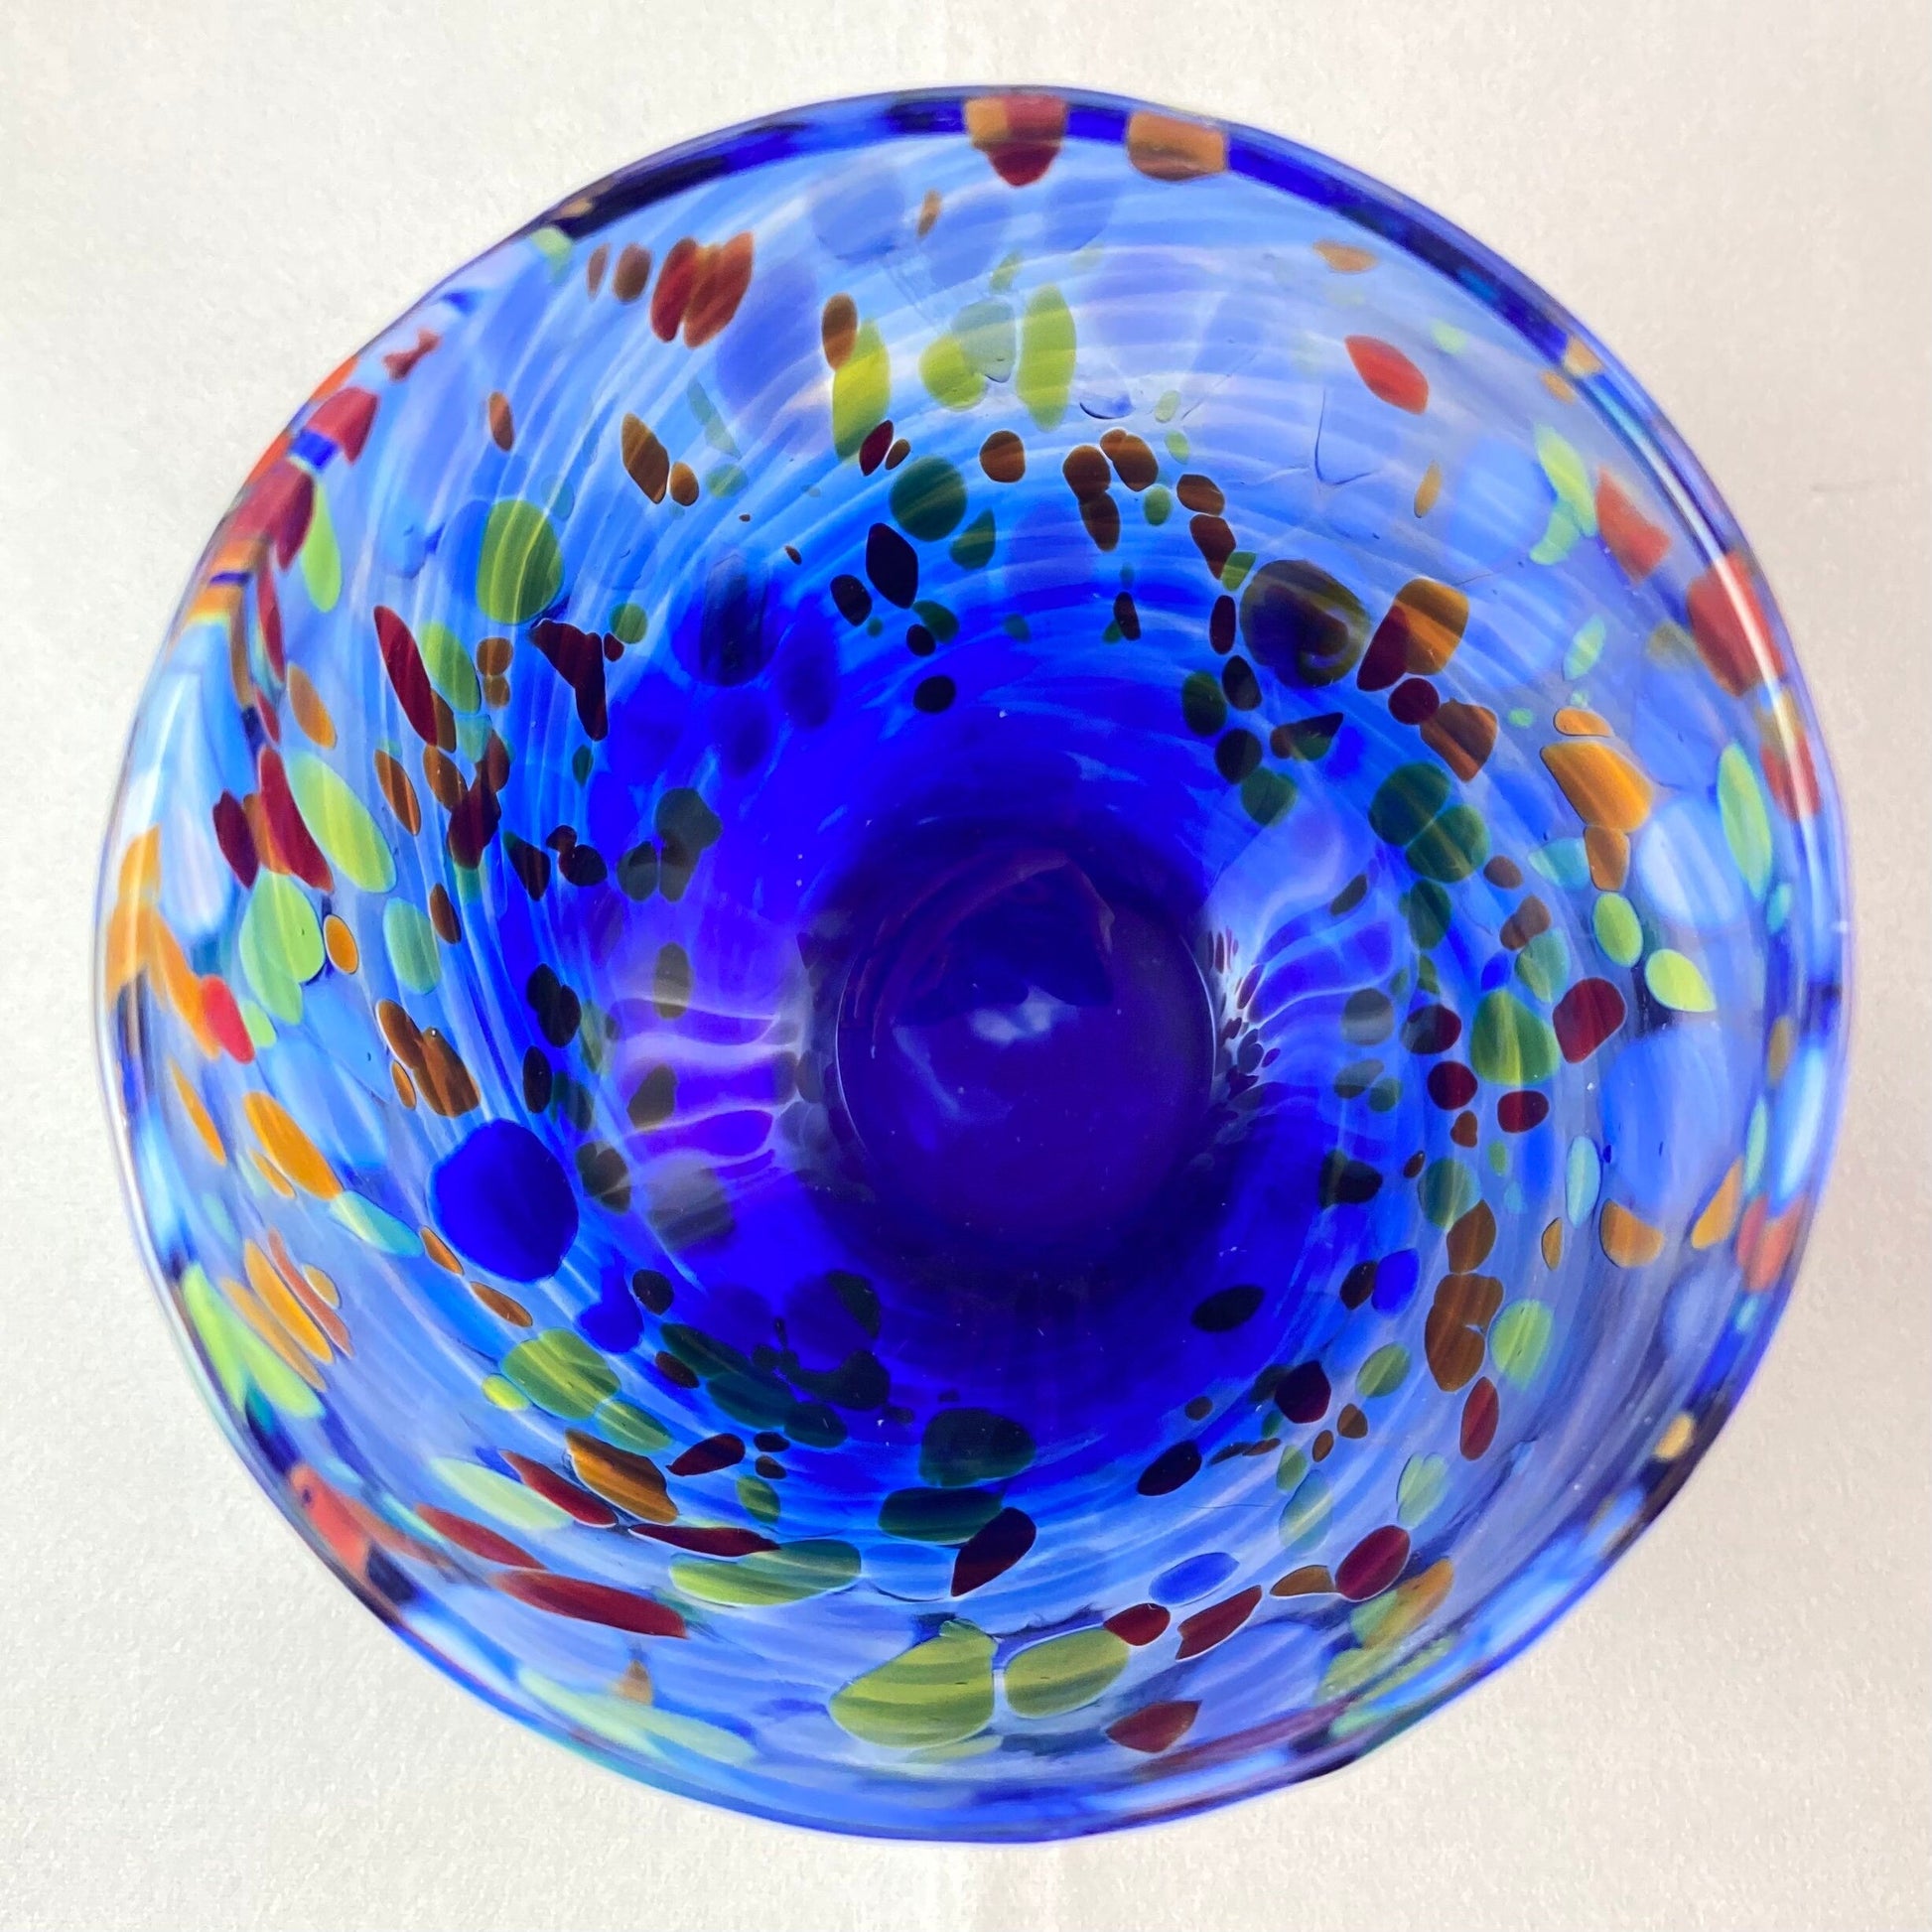 Blue Venetian Glass Stemless Wine Glass - Handmade in Italy, Colorful Murano Glass